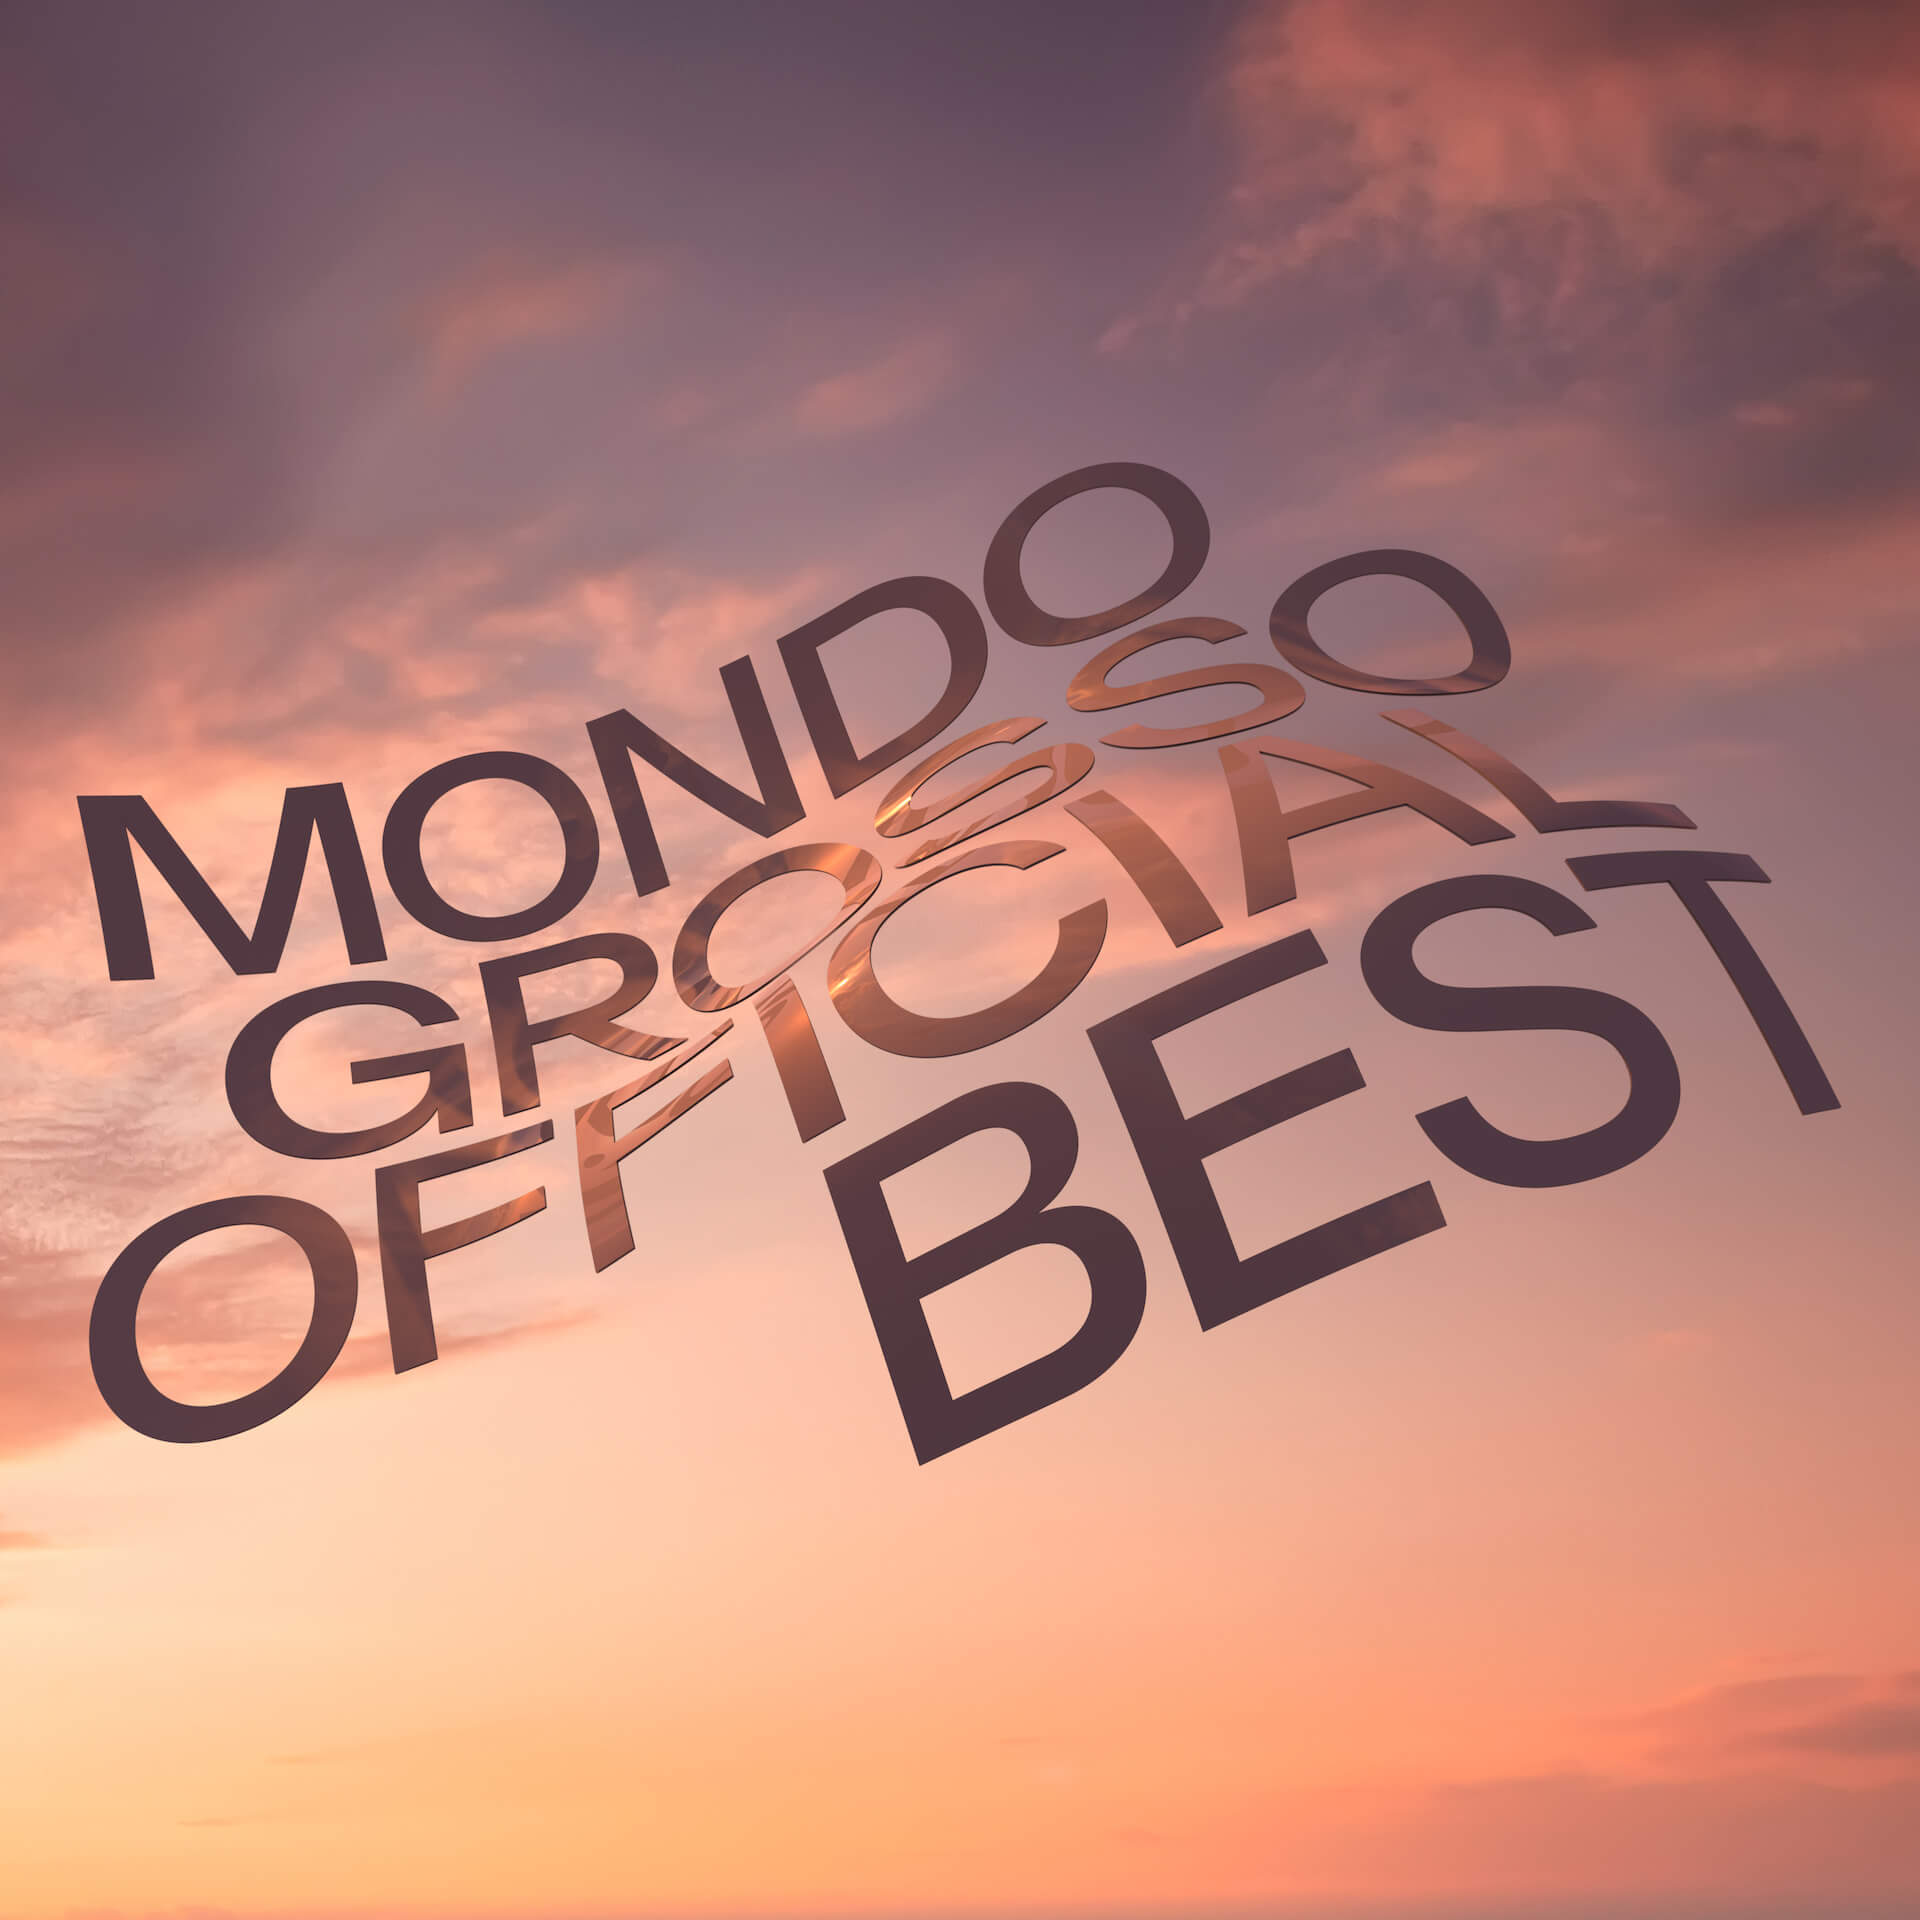 『MONDO GROSSO OFFICIAL BEST』から辿る、結成30年に渡る大沢伸一の音楽性の変化と歴史 column211026_mondogrosso_01